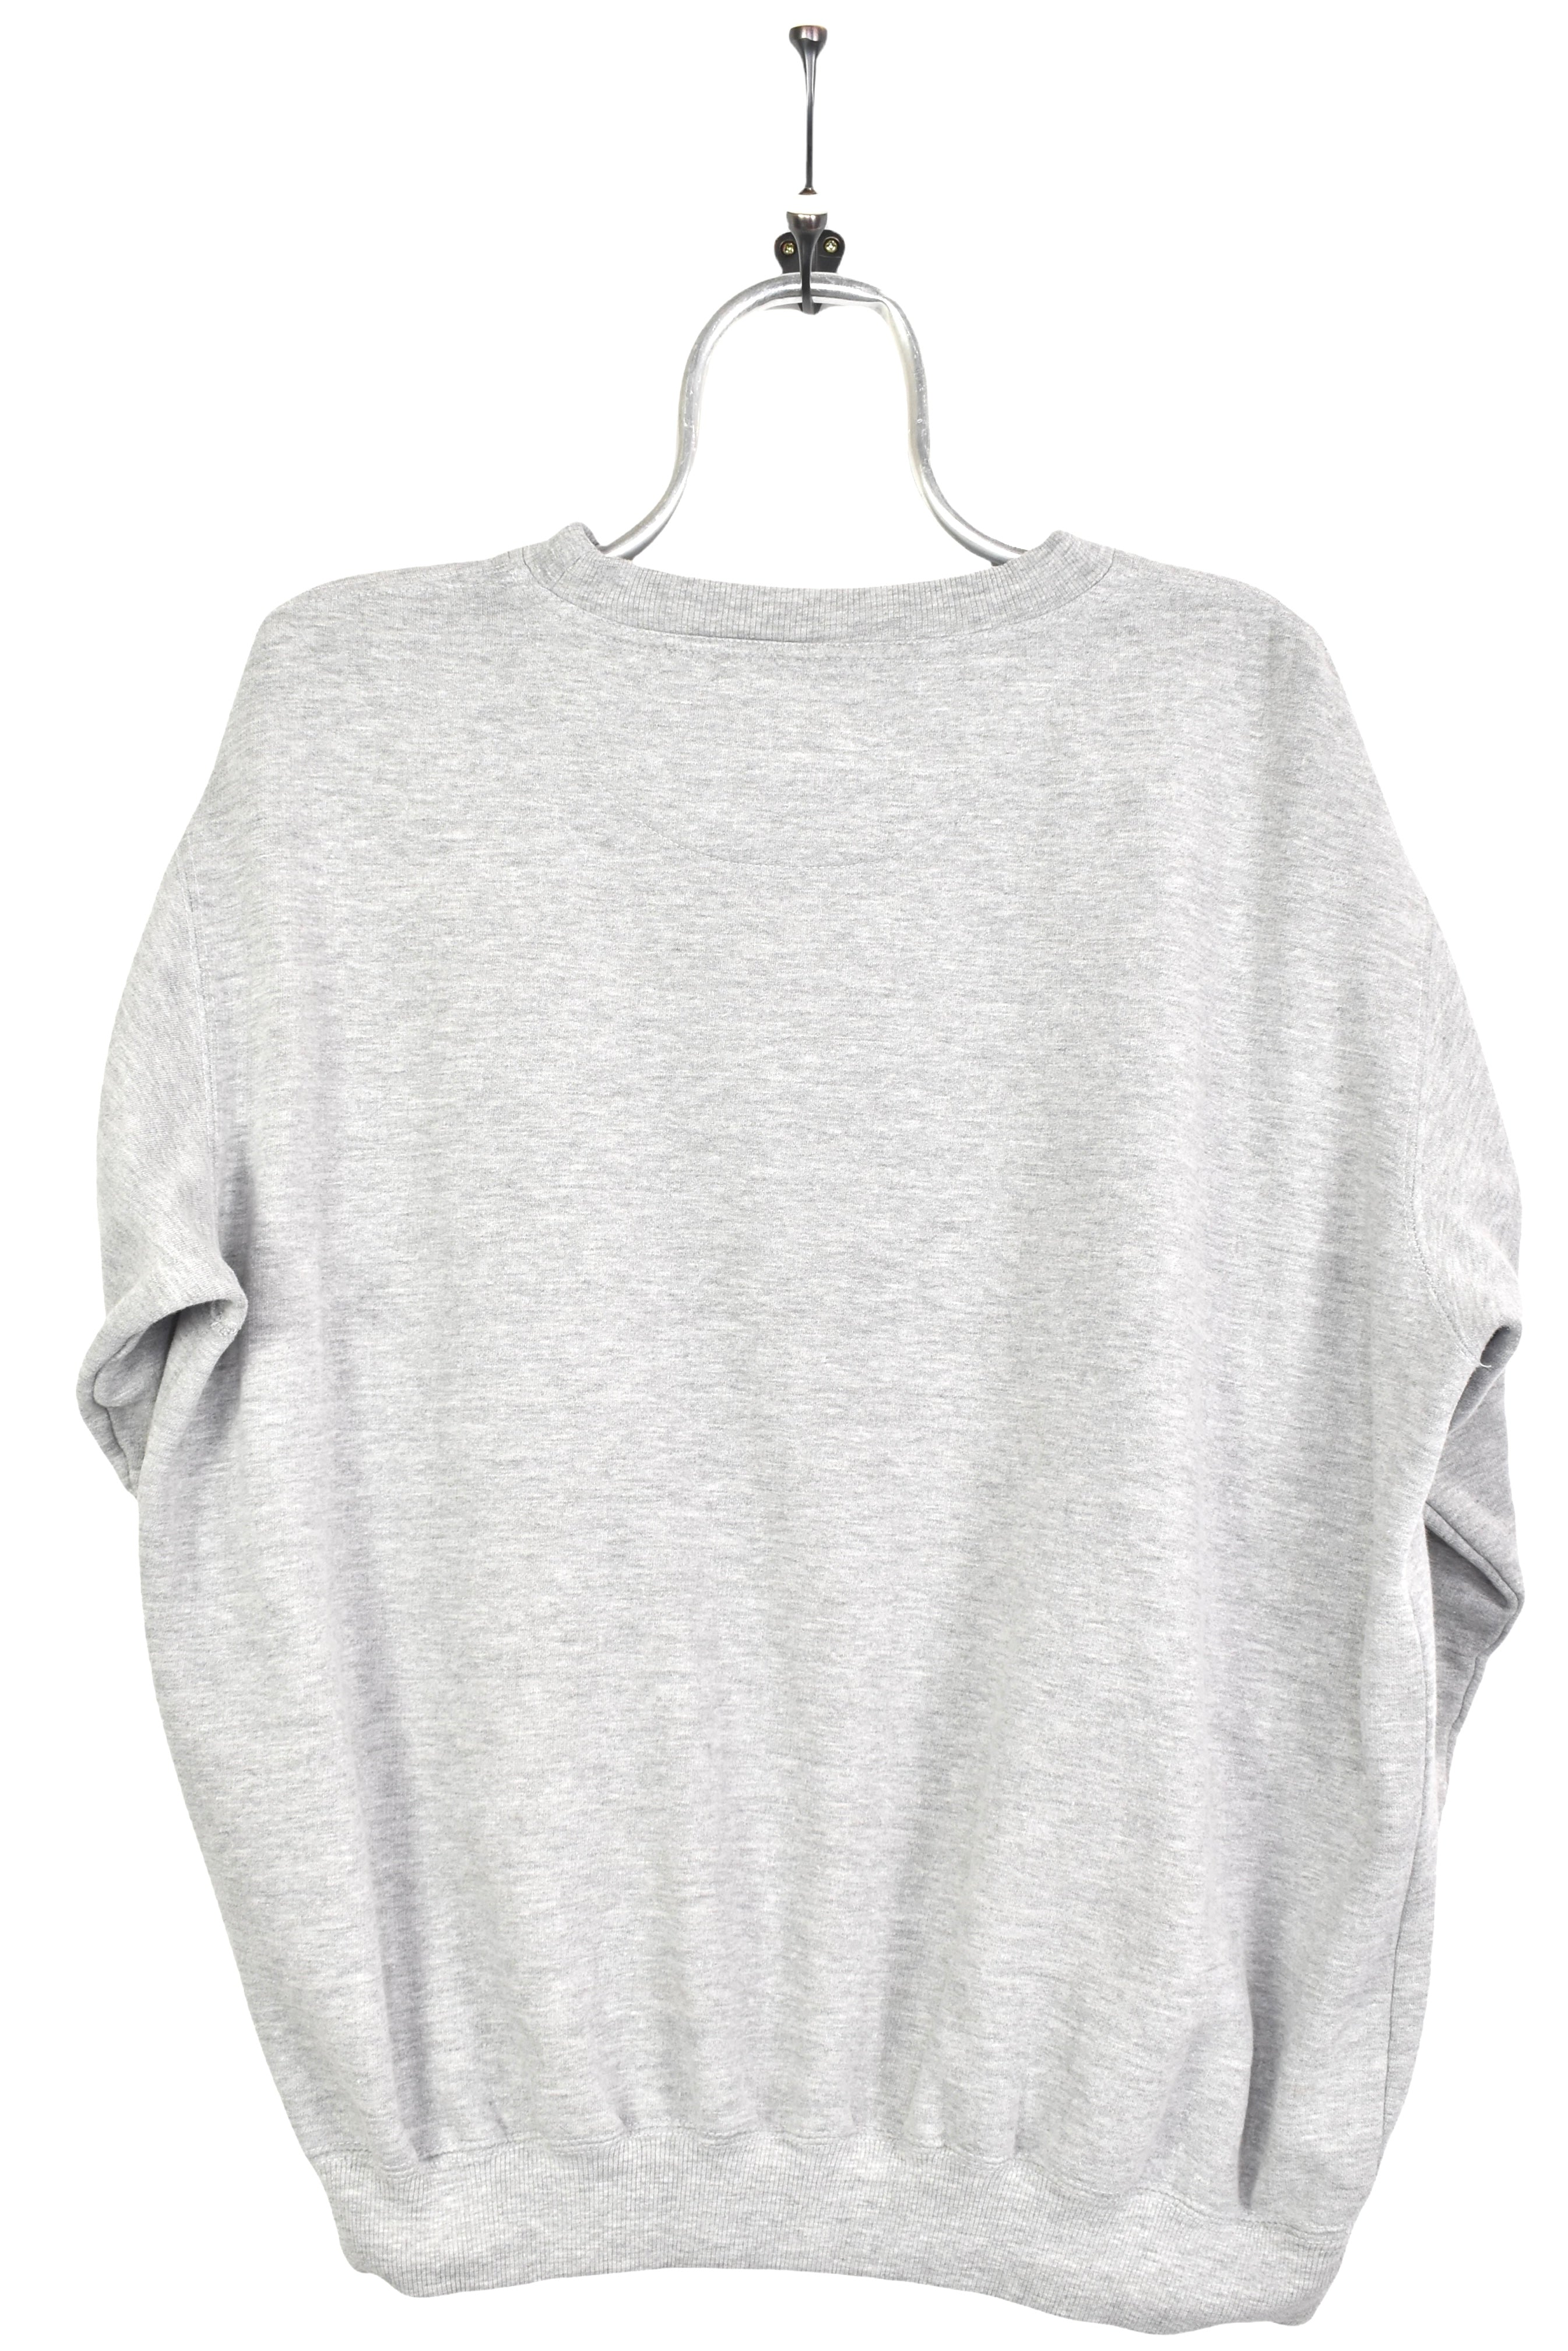 Vintage Michigan State University sweatshirt, long sleeve embroidered crewneck - large, grey COLLEGE